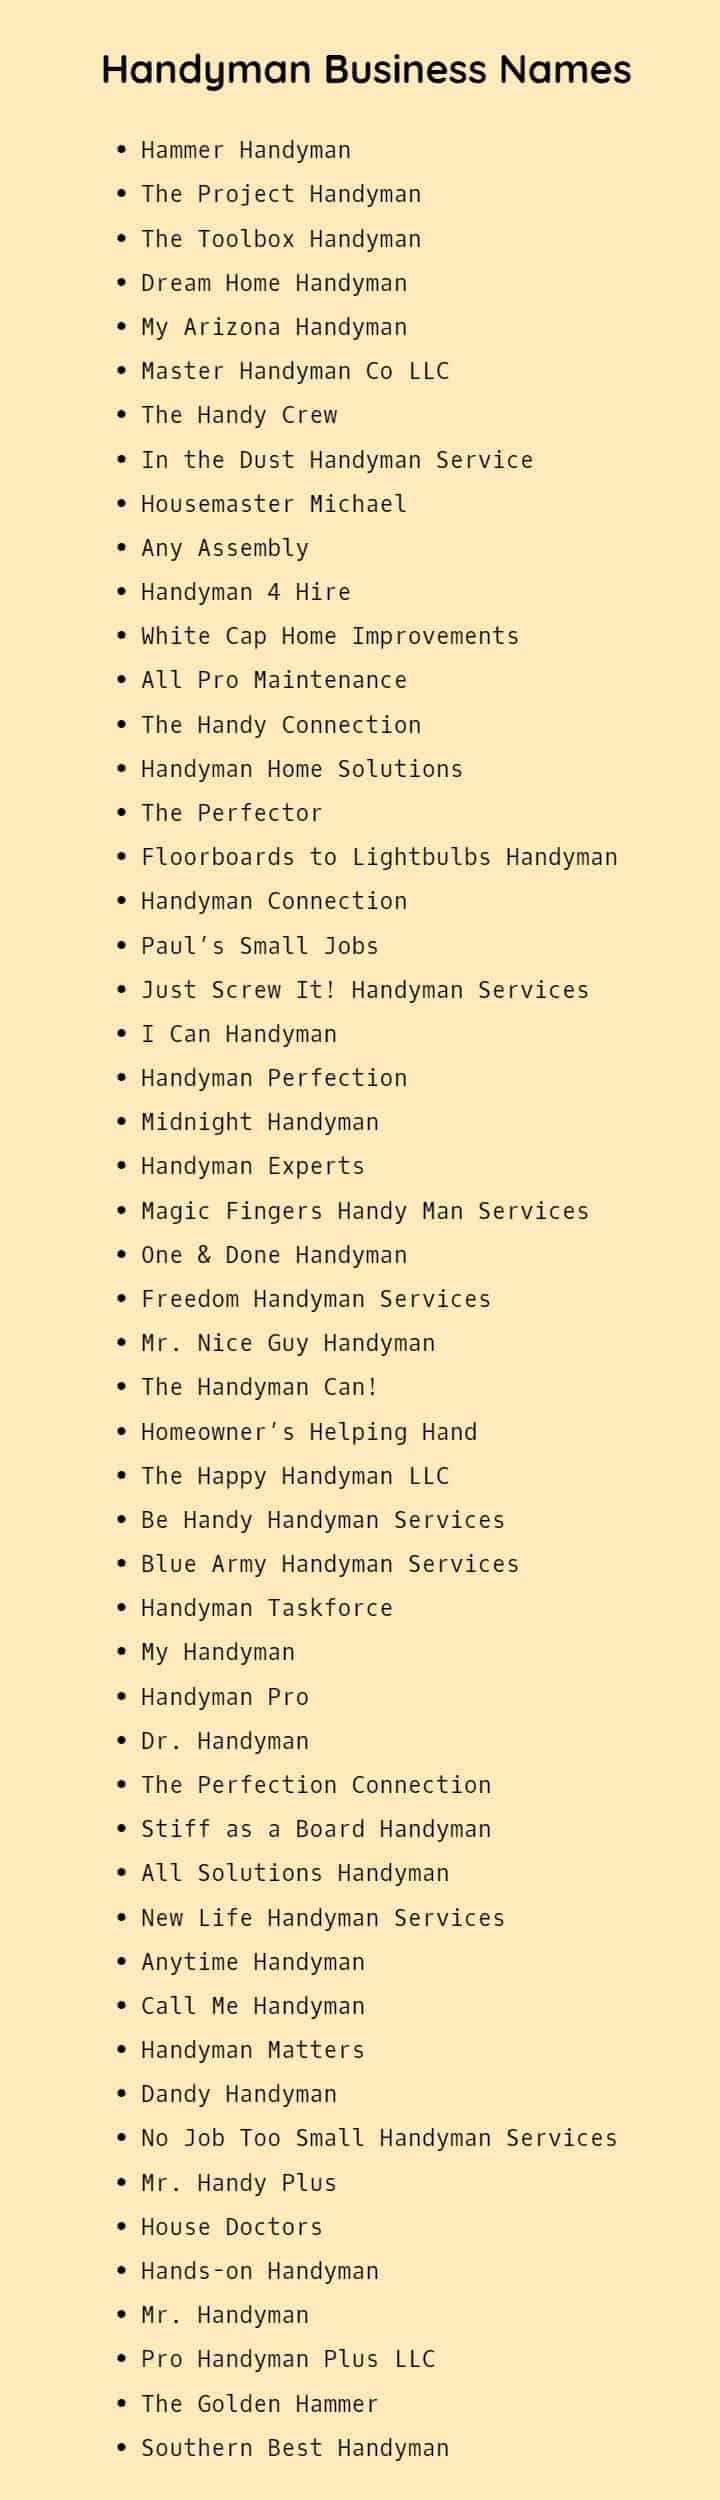 handyman business names